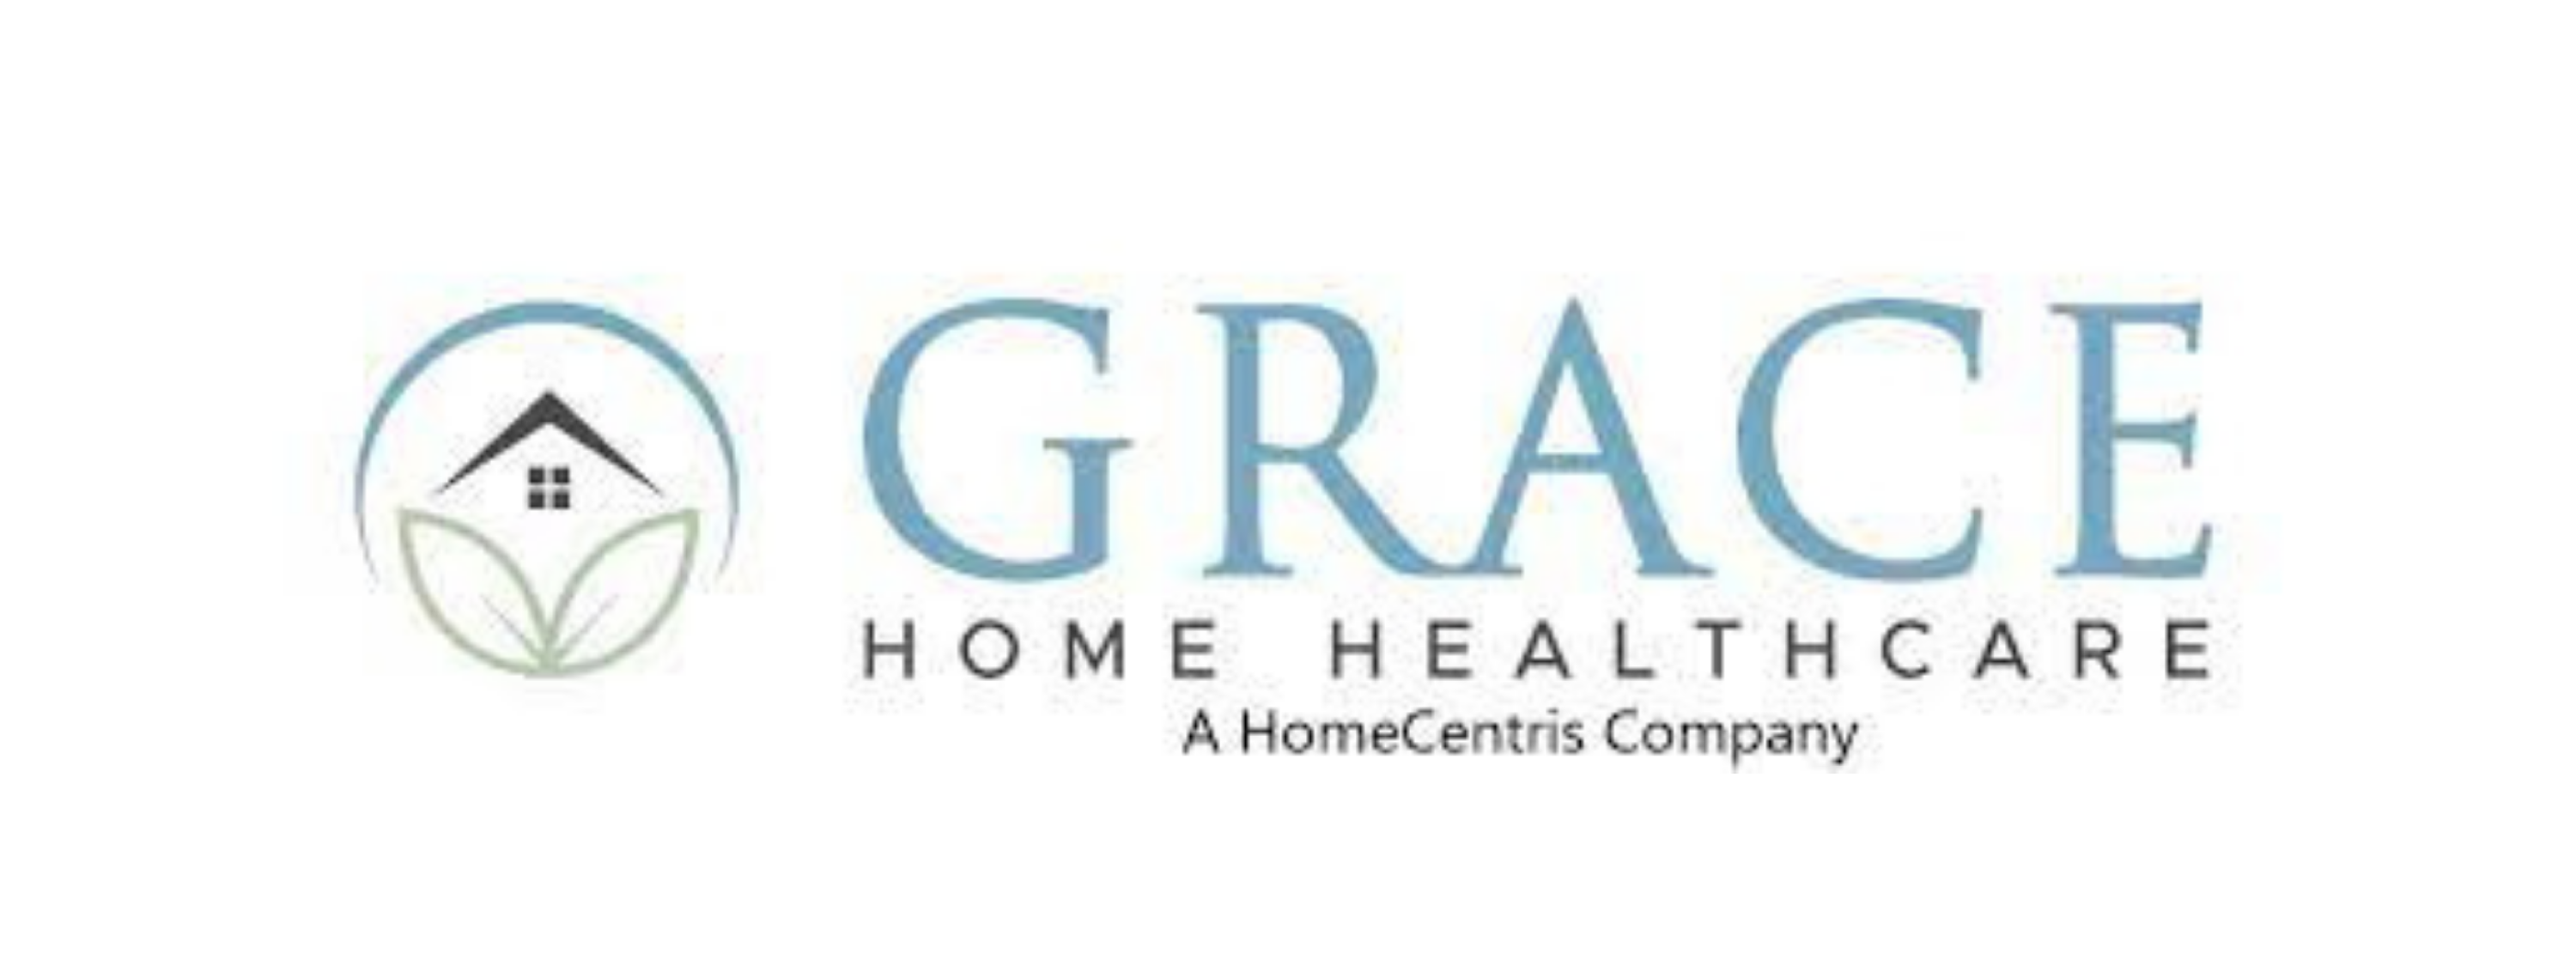 6. Grace Home Healthcare, a HomeCentris Company (Friend)